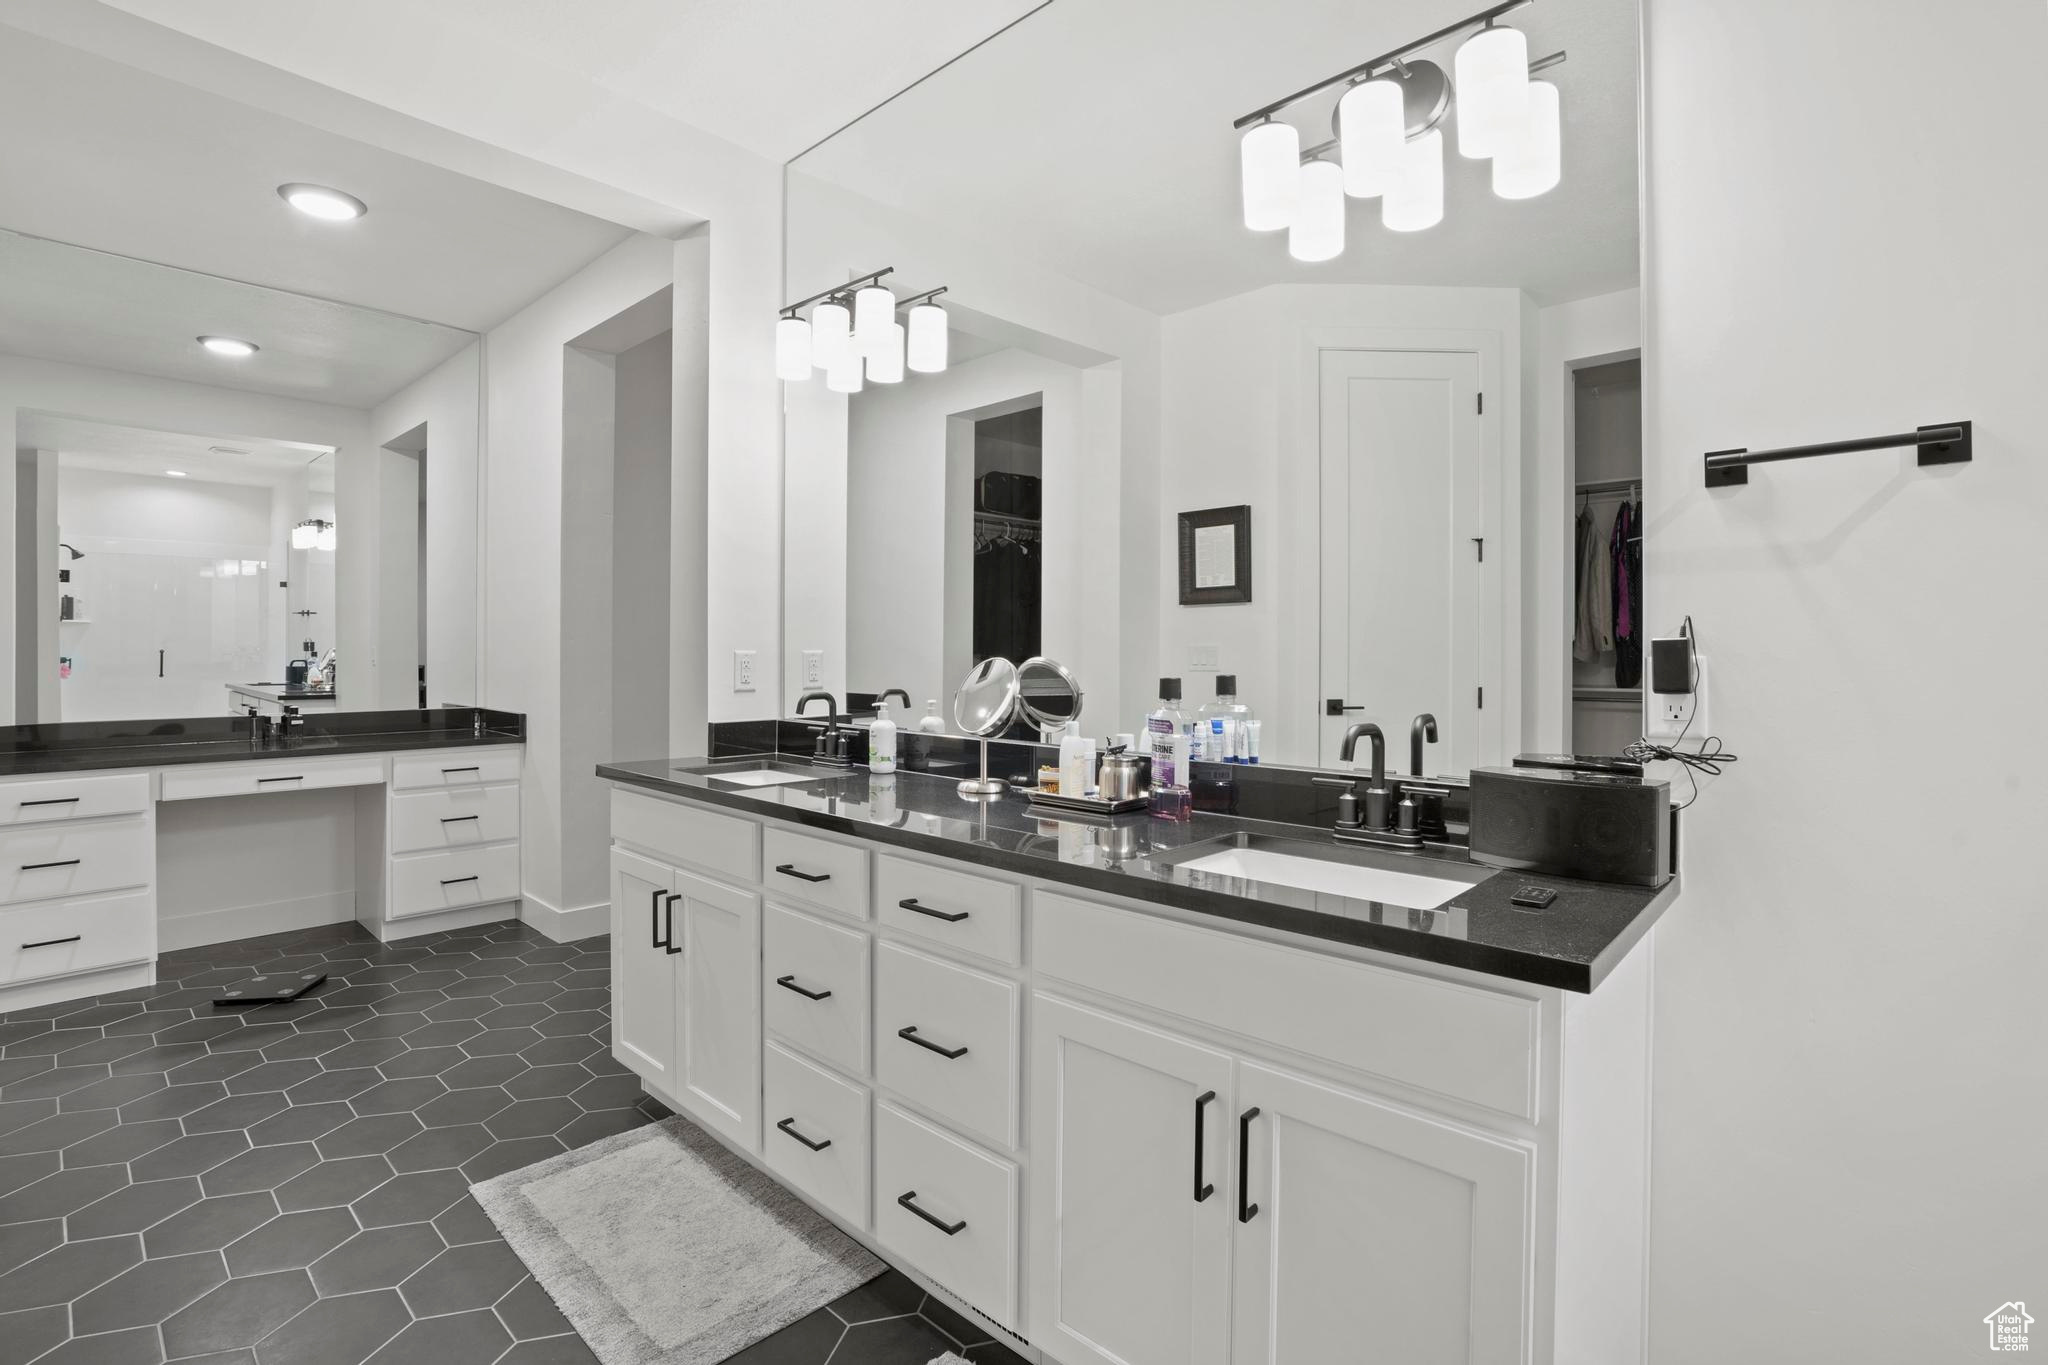 Bathroom featuring tile flooring and double sink vanity